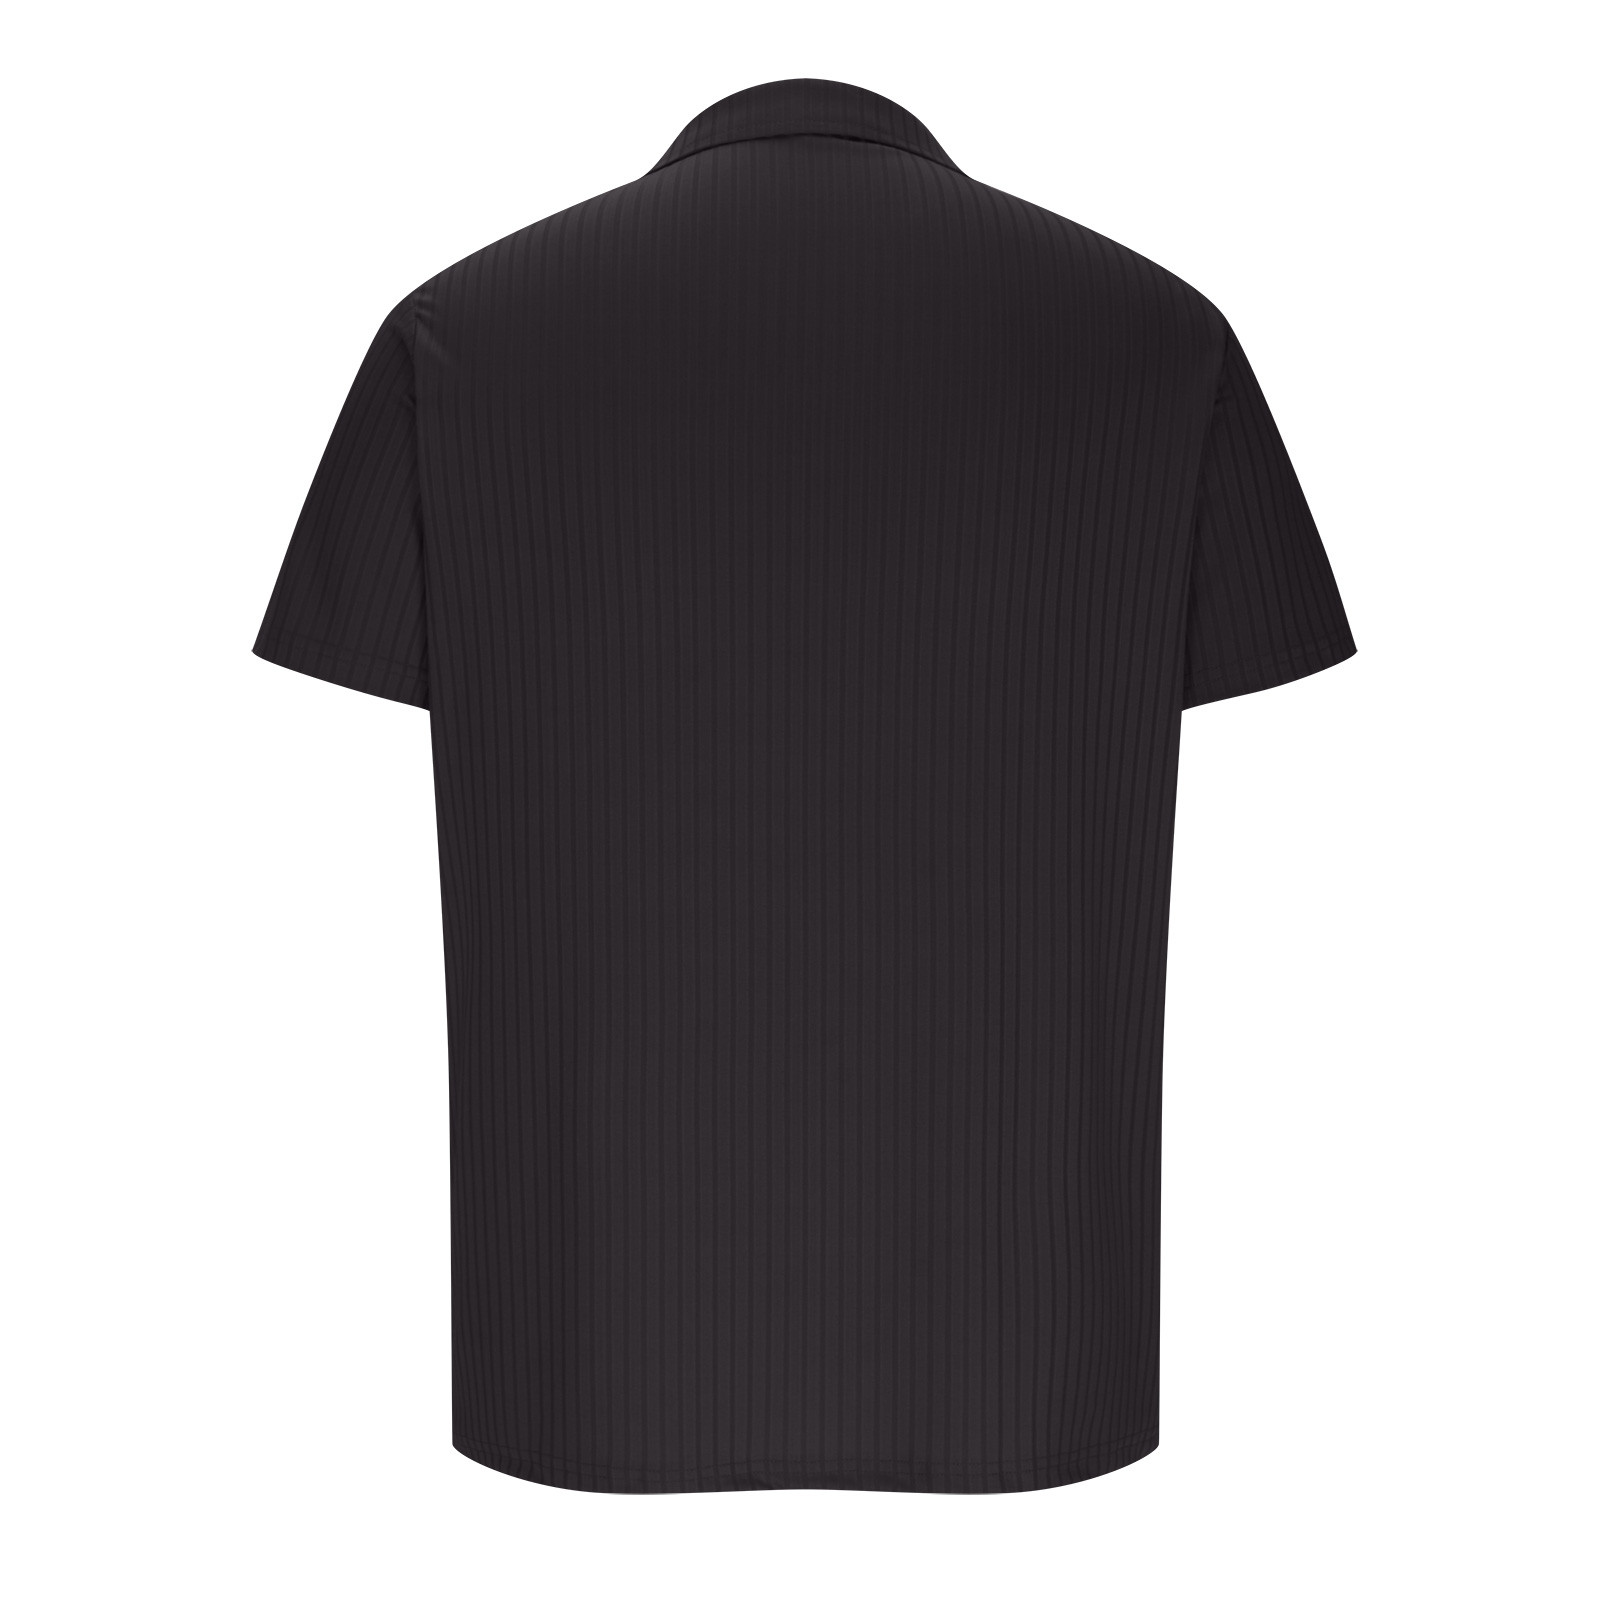 Men's Lapel V-Neck Vertical Striped Elasticity Shirts Slim Fit Short ...